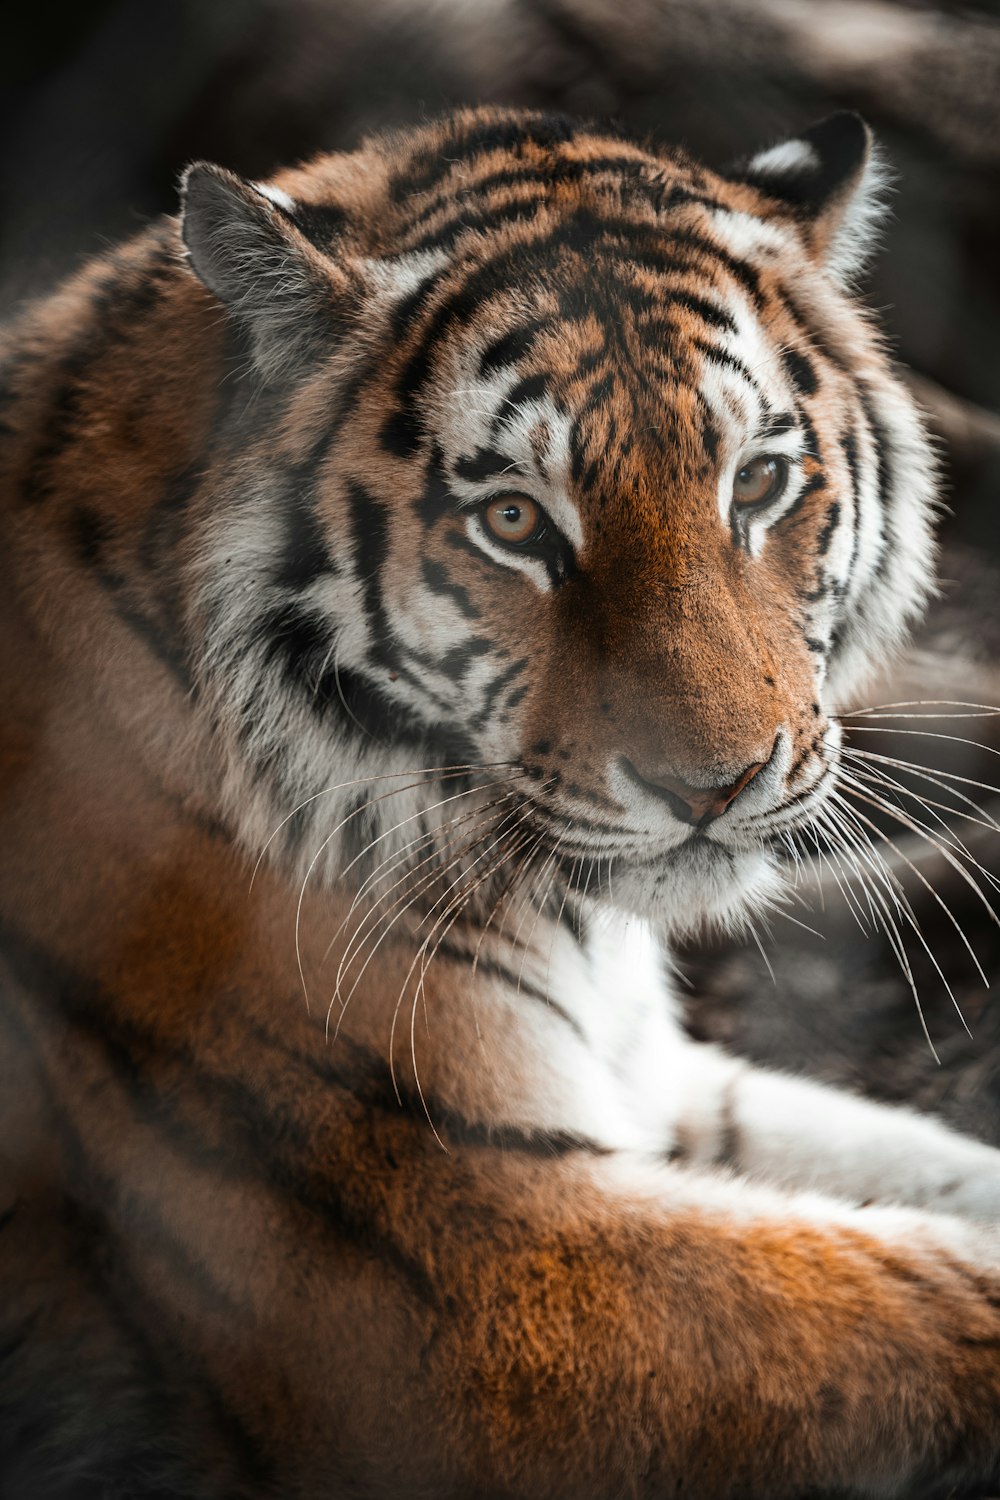 Tiger Wallpaper Pictures | Download Free Images on Unsplash